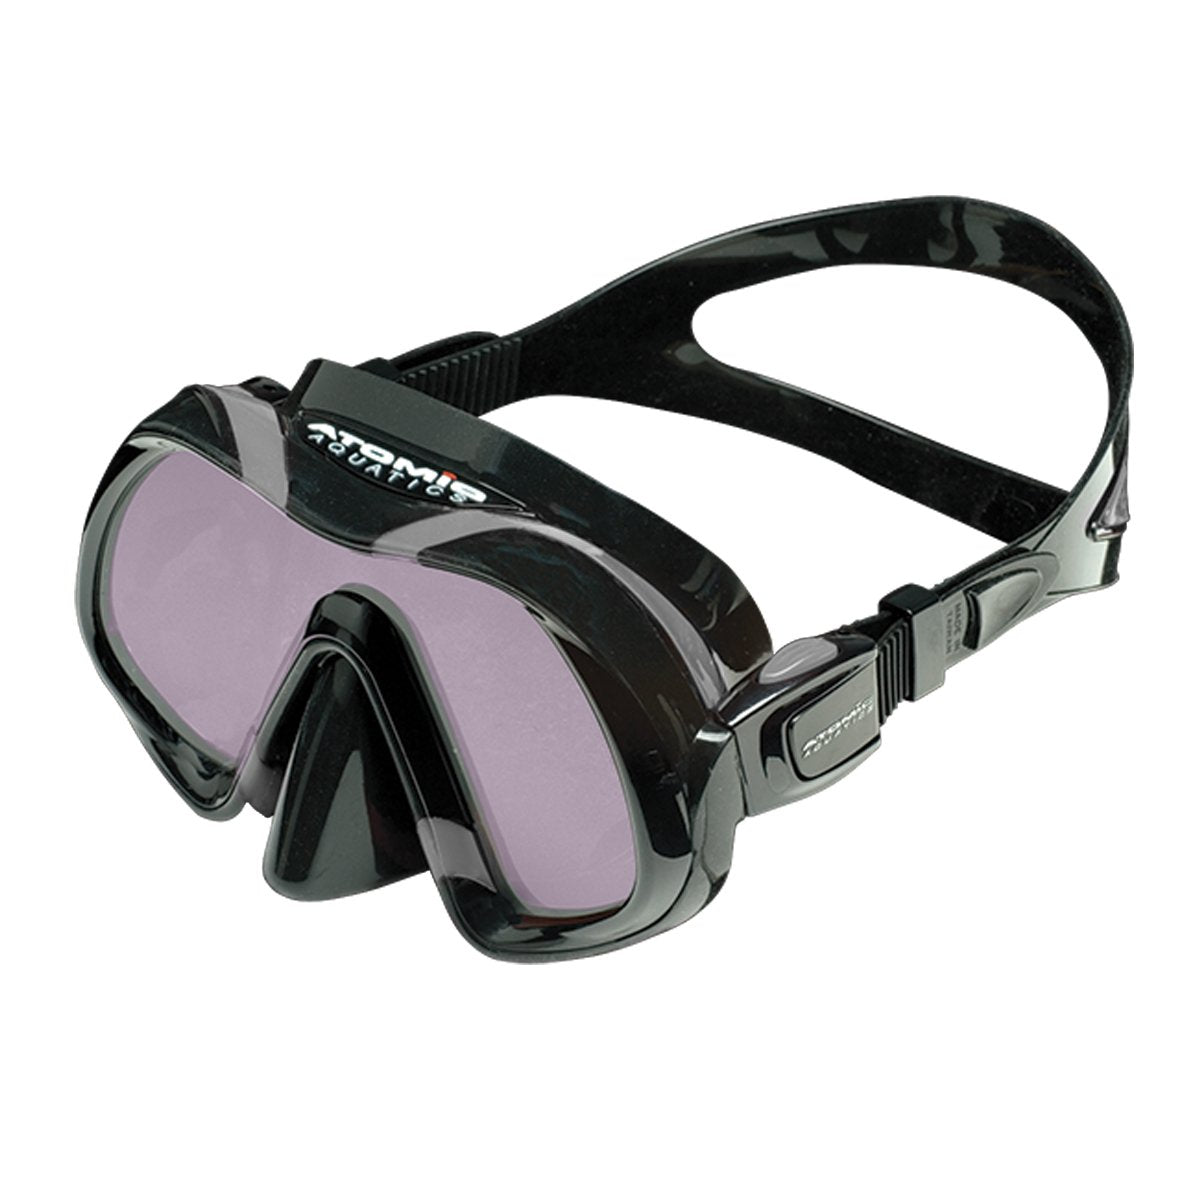 Venom ARC Mask-wetsuit, diver, sharkskin, snorkeling gear, watersports equipment, diving fins, snorkeling mask, ocean reef, Garmin G1